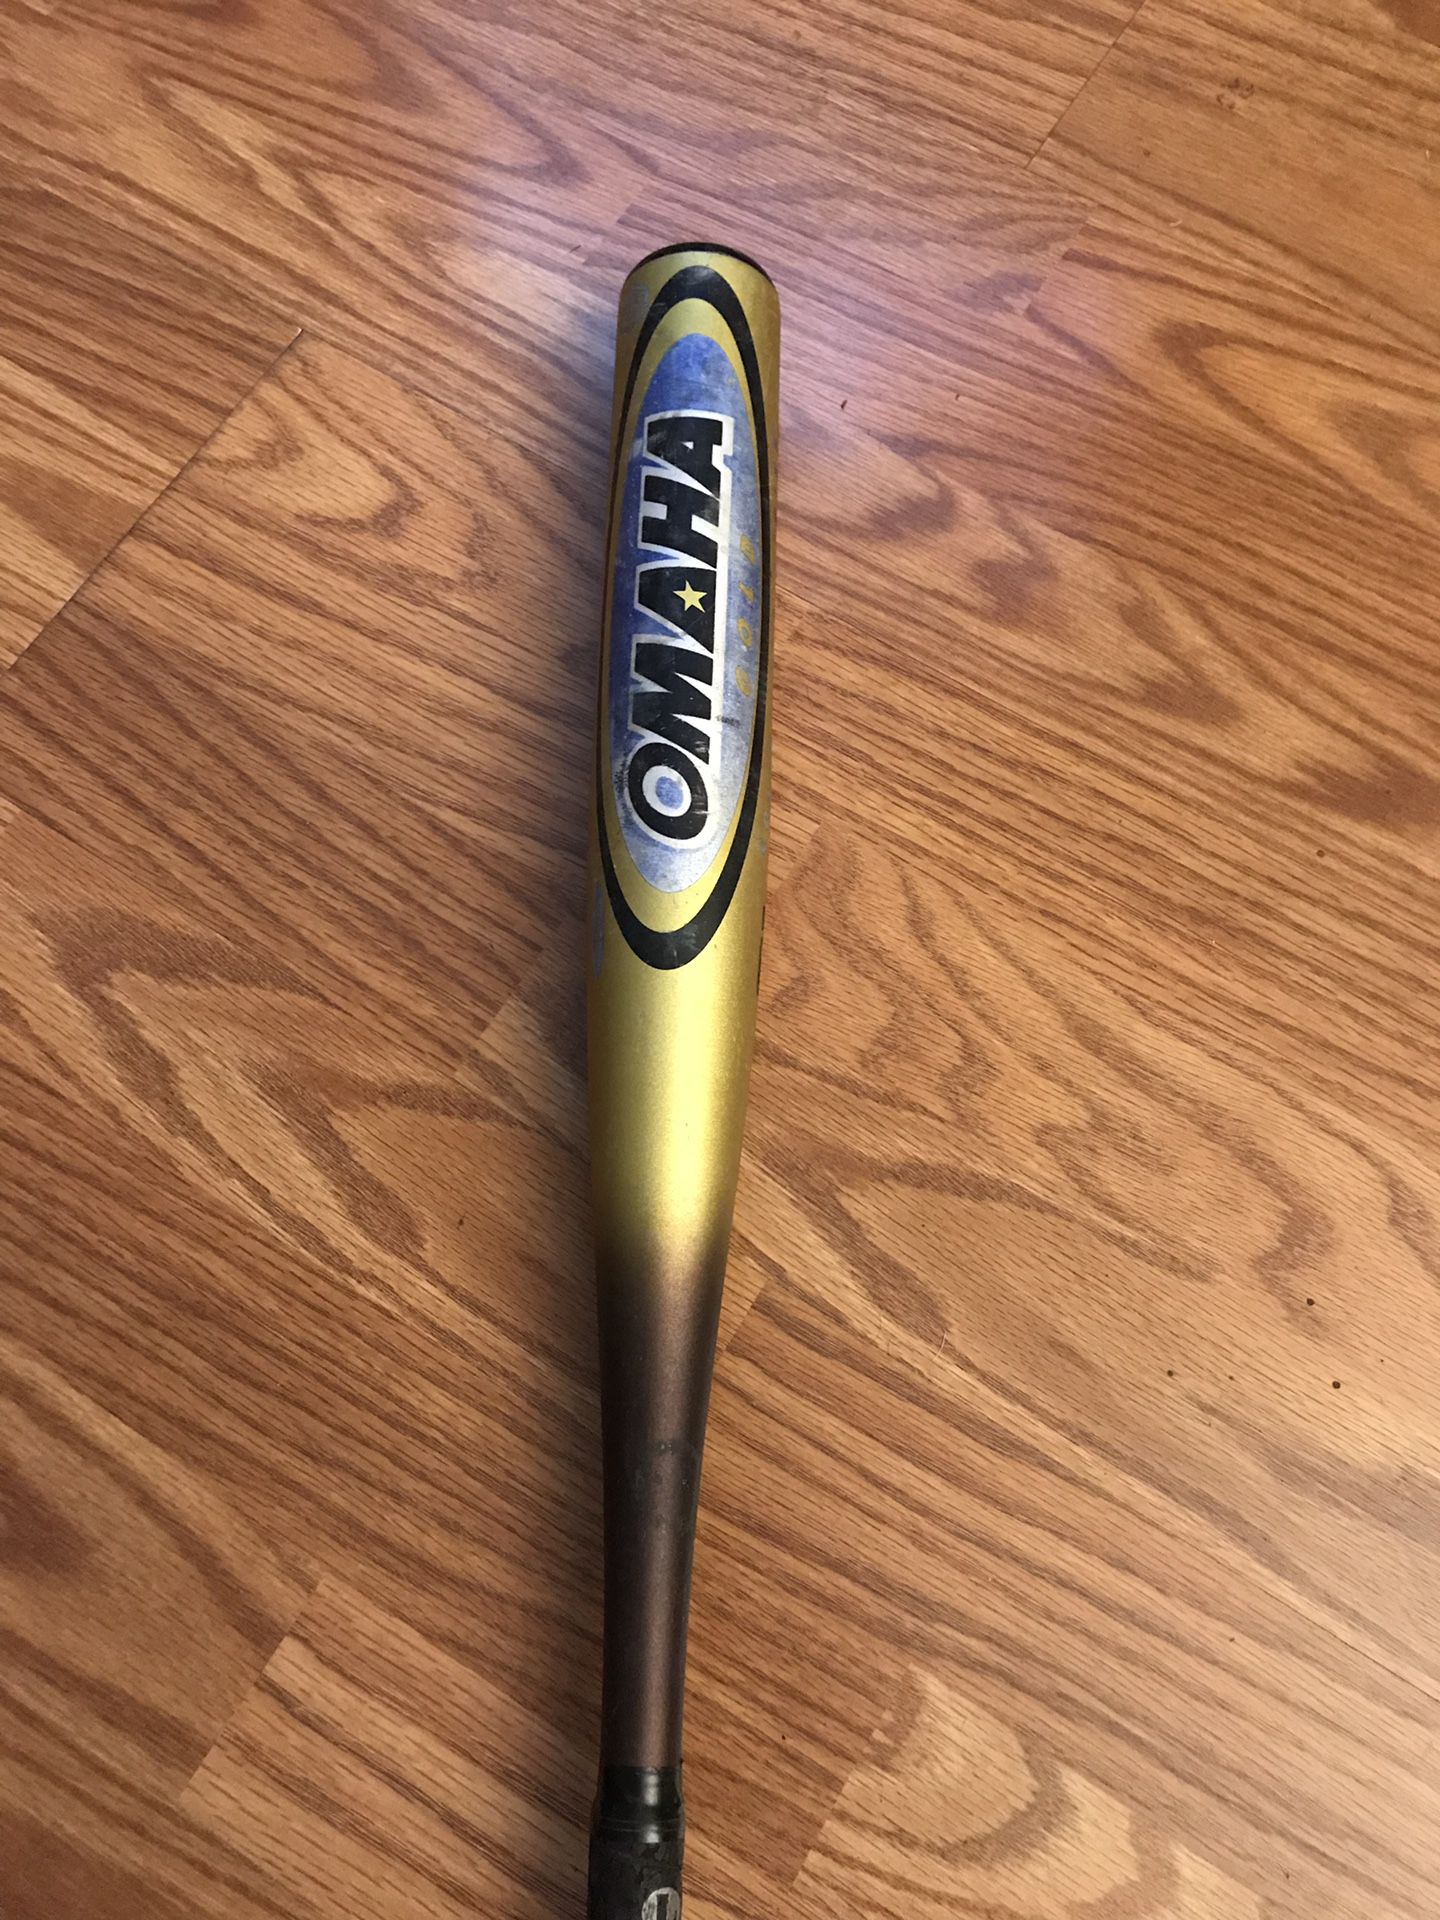 Omaha Louisville slugger baseball bat